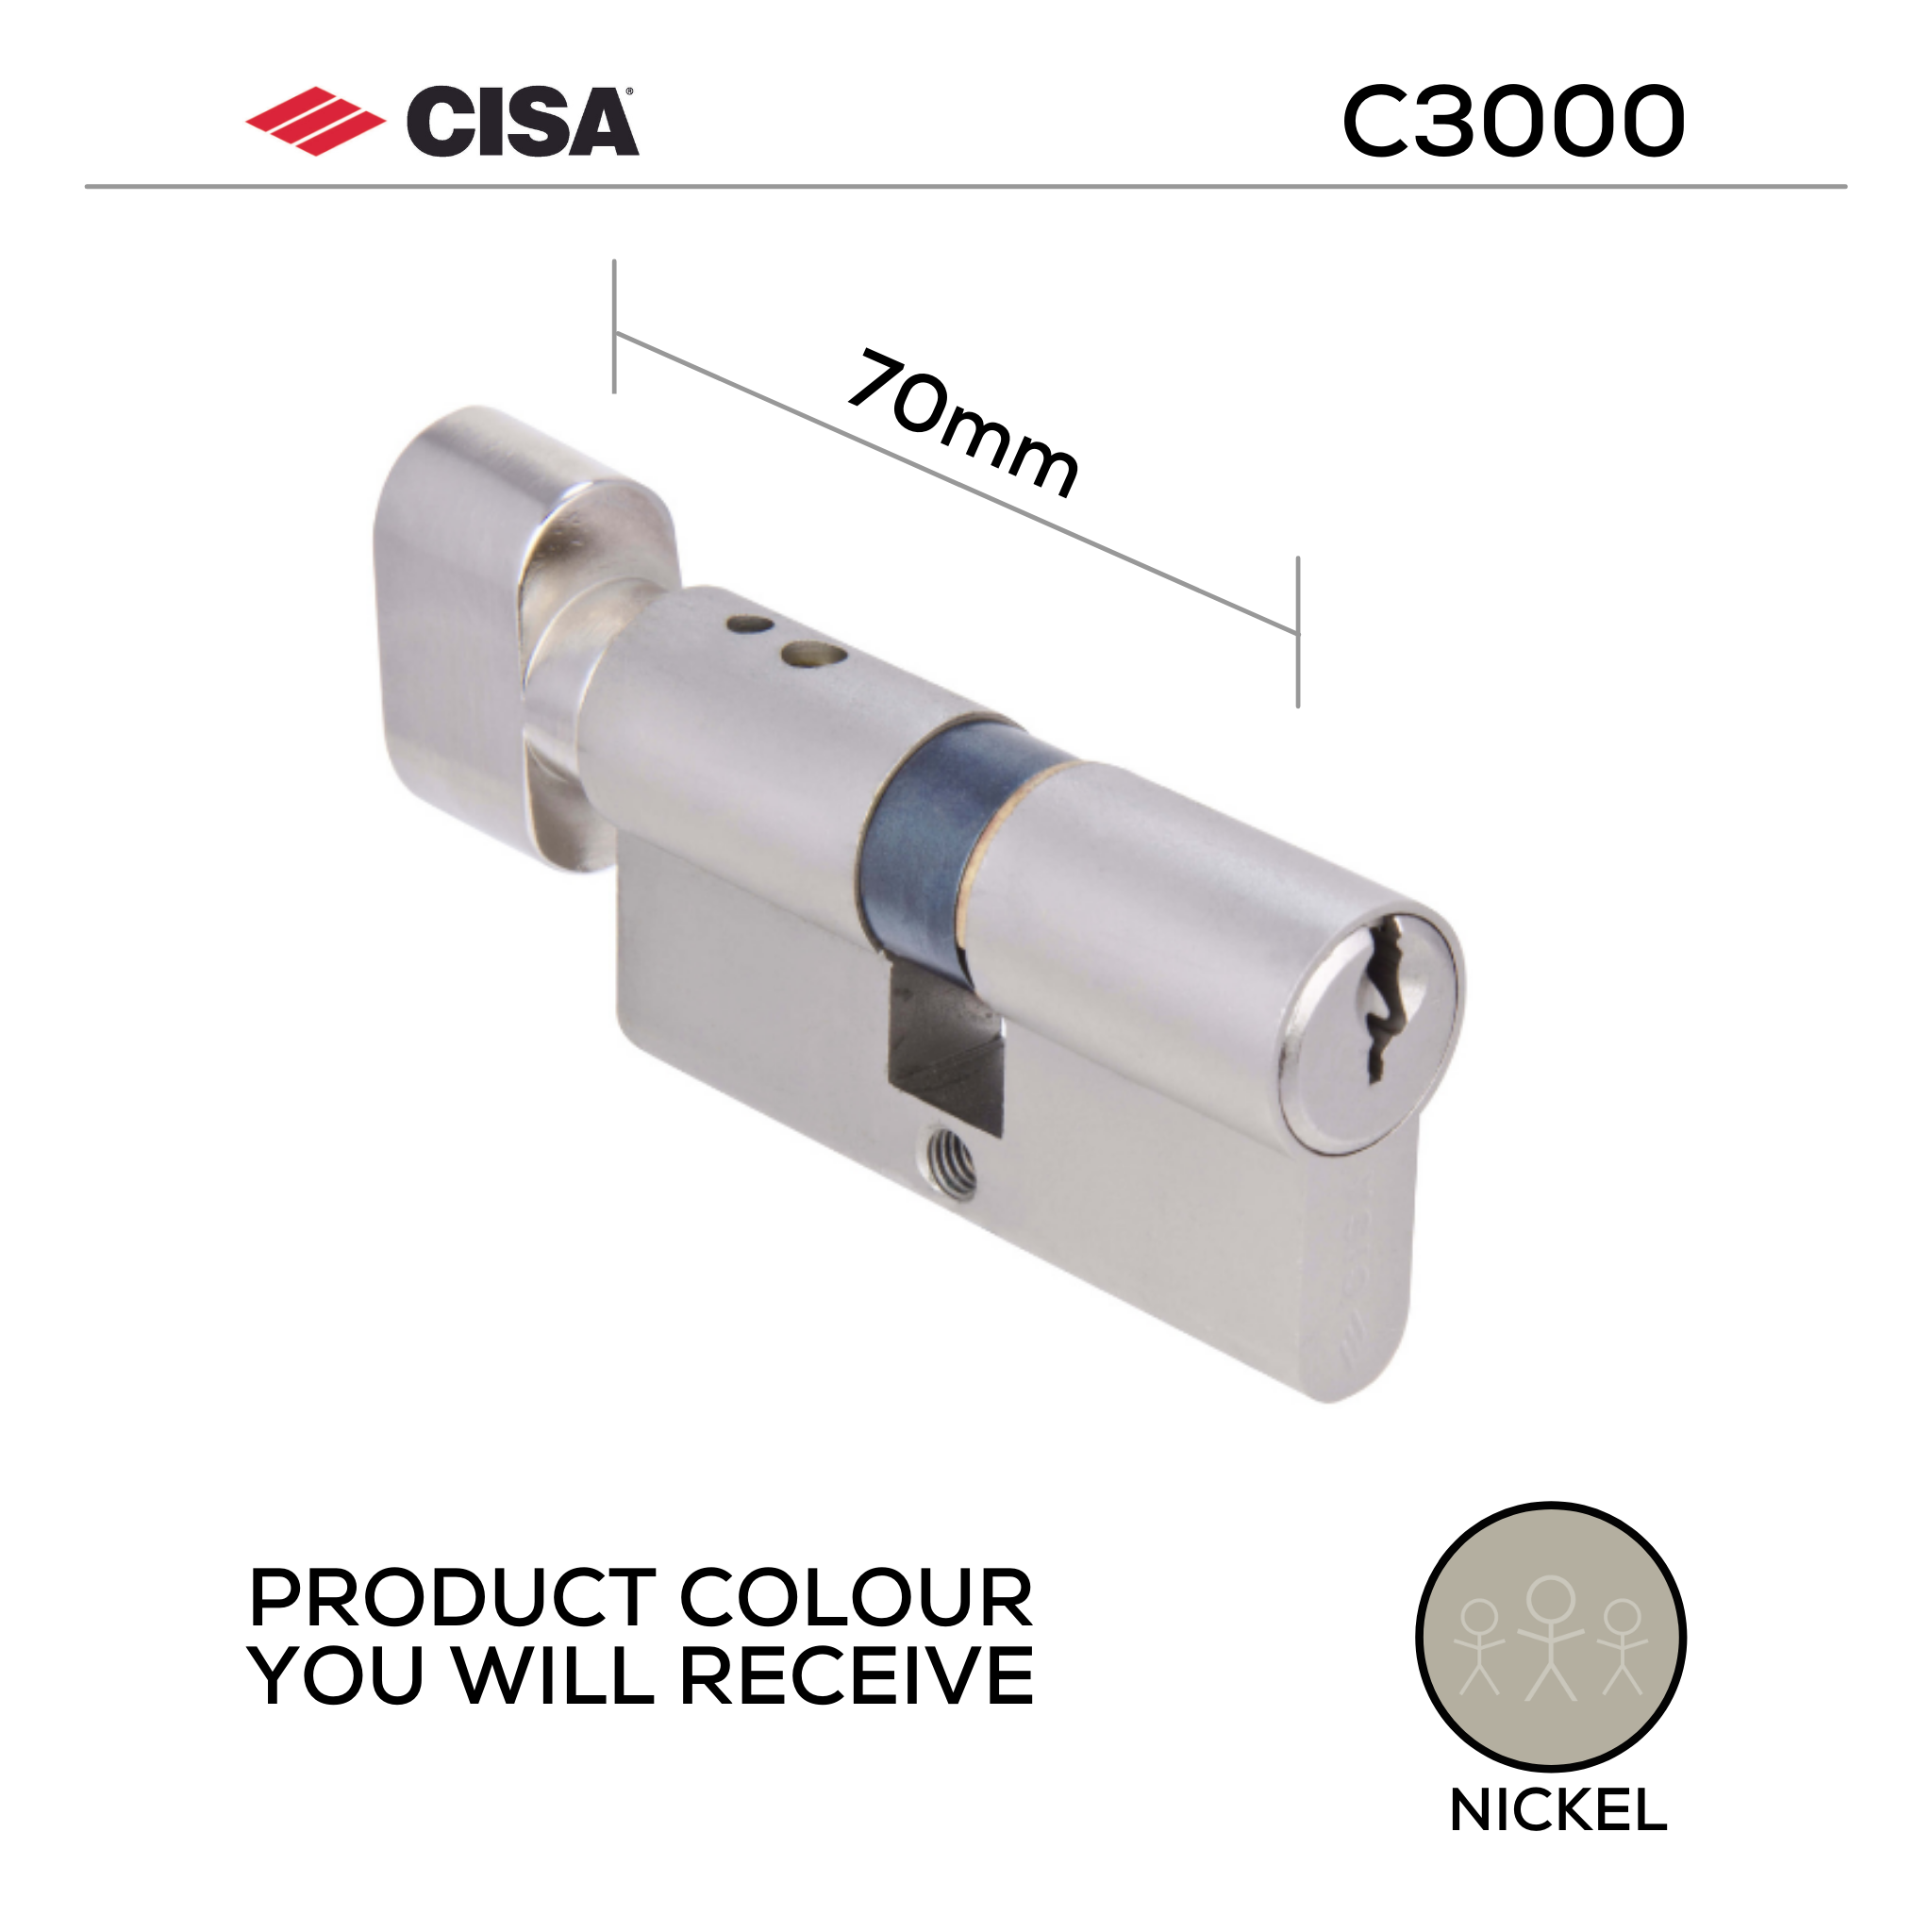 0N317-12-12-KD, 70mm - 39.5/29.5, Double Cylinder, C3000, Thumbturn to Key, Keyed to Differ (Standard), 3 Keys, 6 Pin, Nickel, CISA